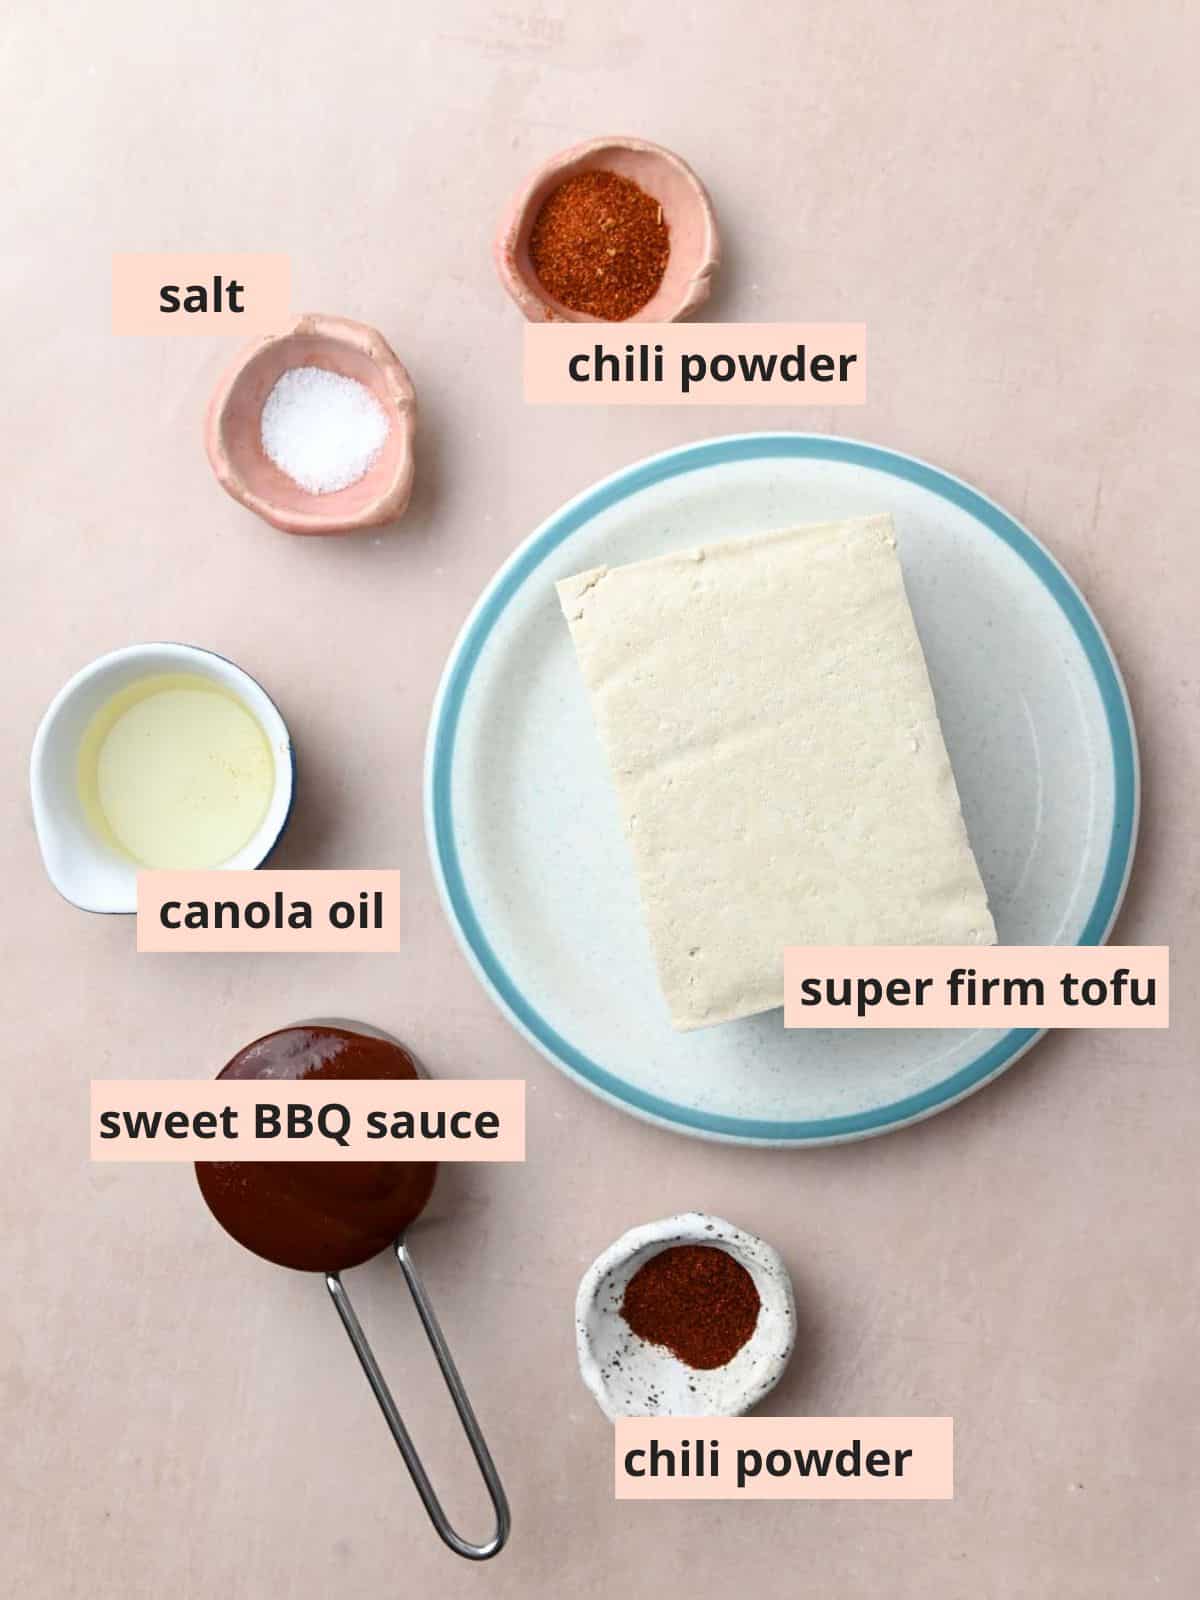 Labeled ingredients used to make shredded tofu.